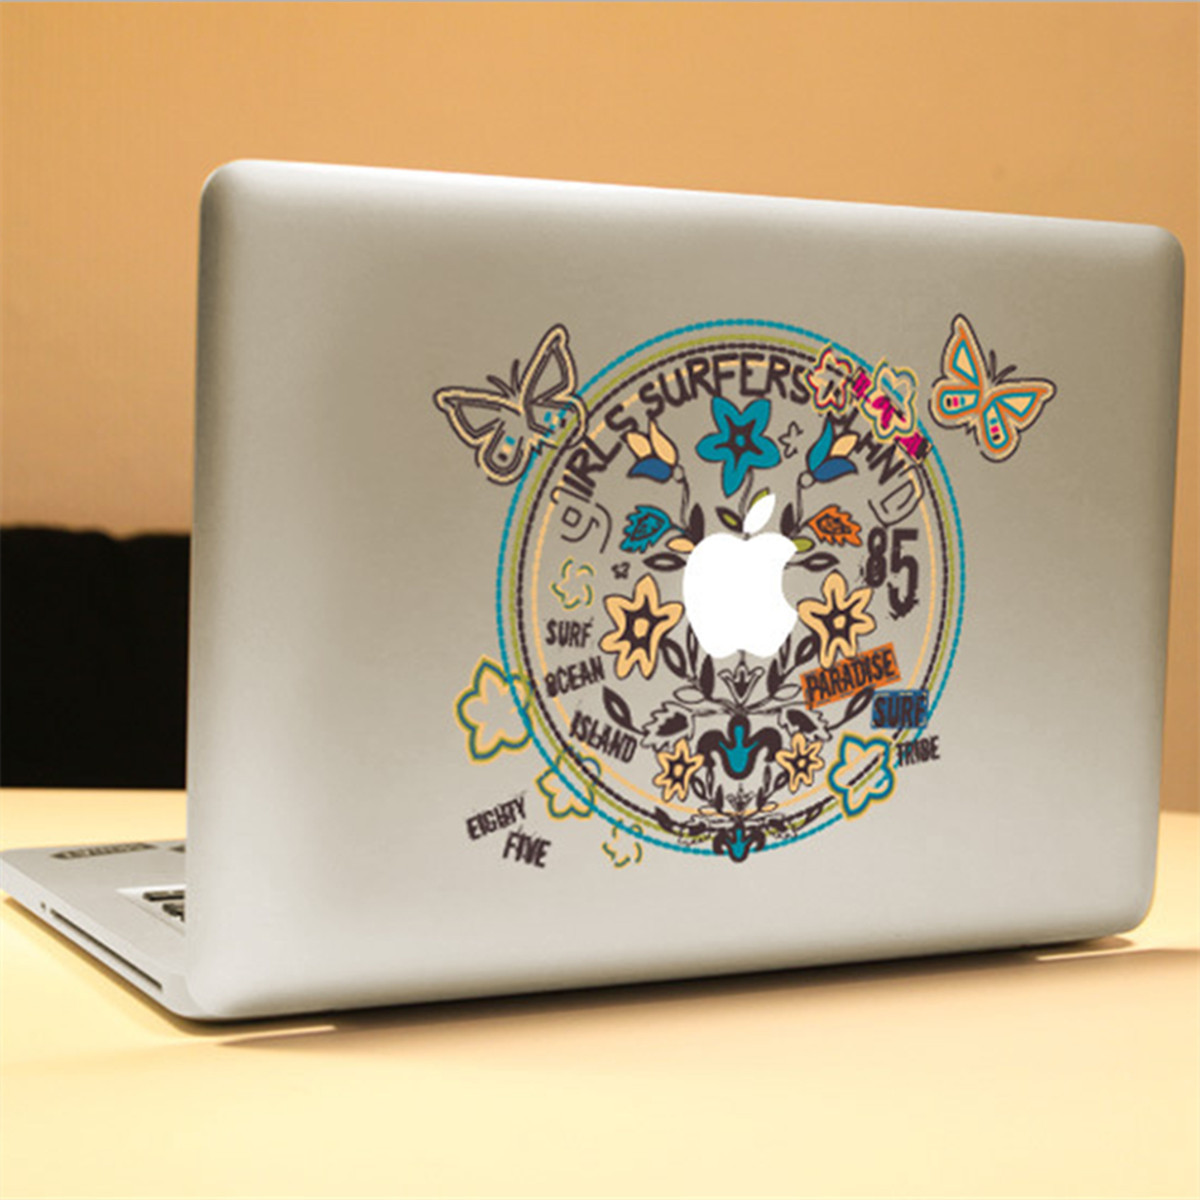 Butterfly-Wreath-Decal-Vinyl-Sticker-Skin-Shell-Decoration-Laptop-Sticker-Decal-For-Apple-MacBook-1033542-6